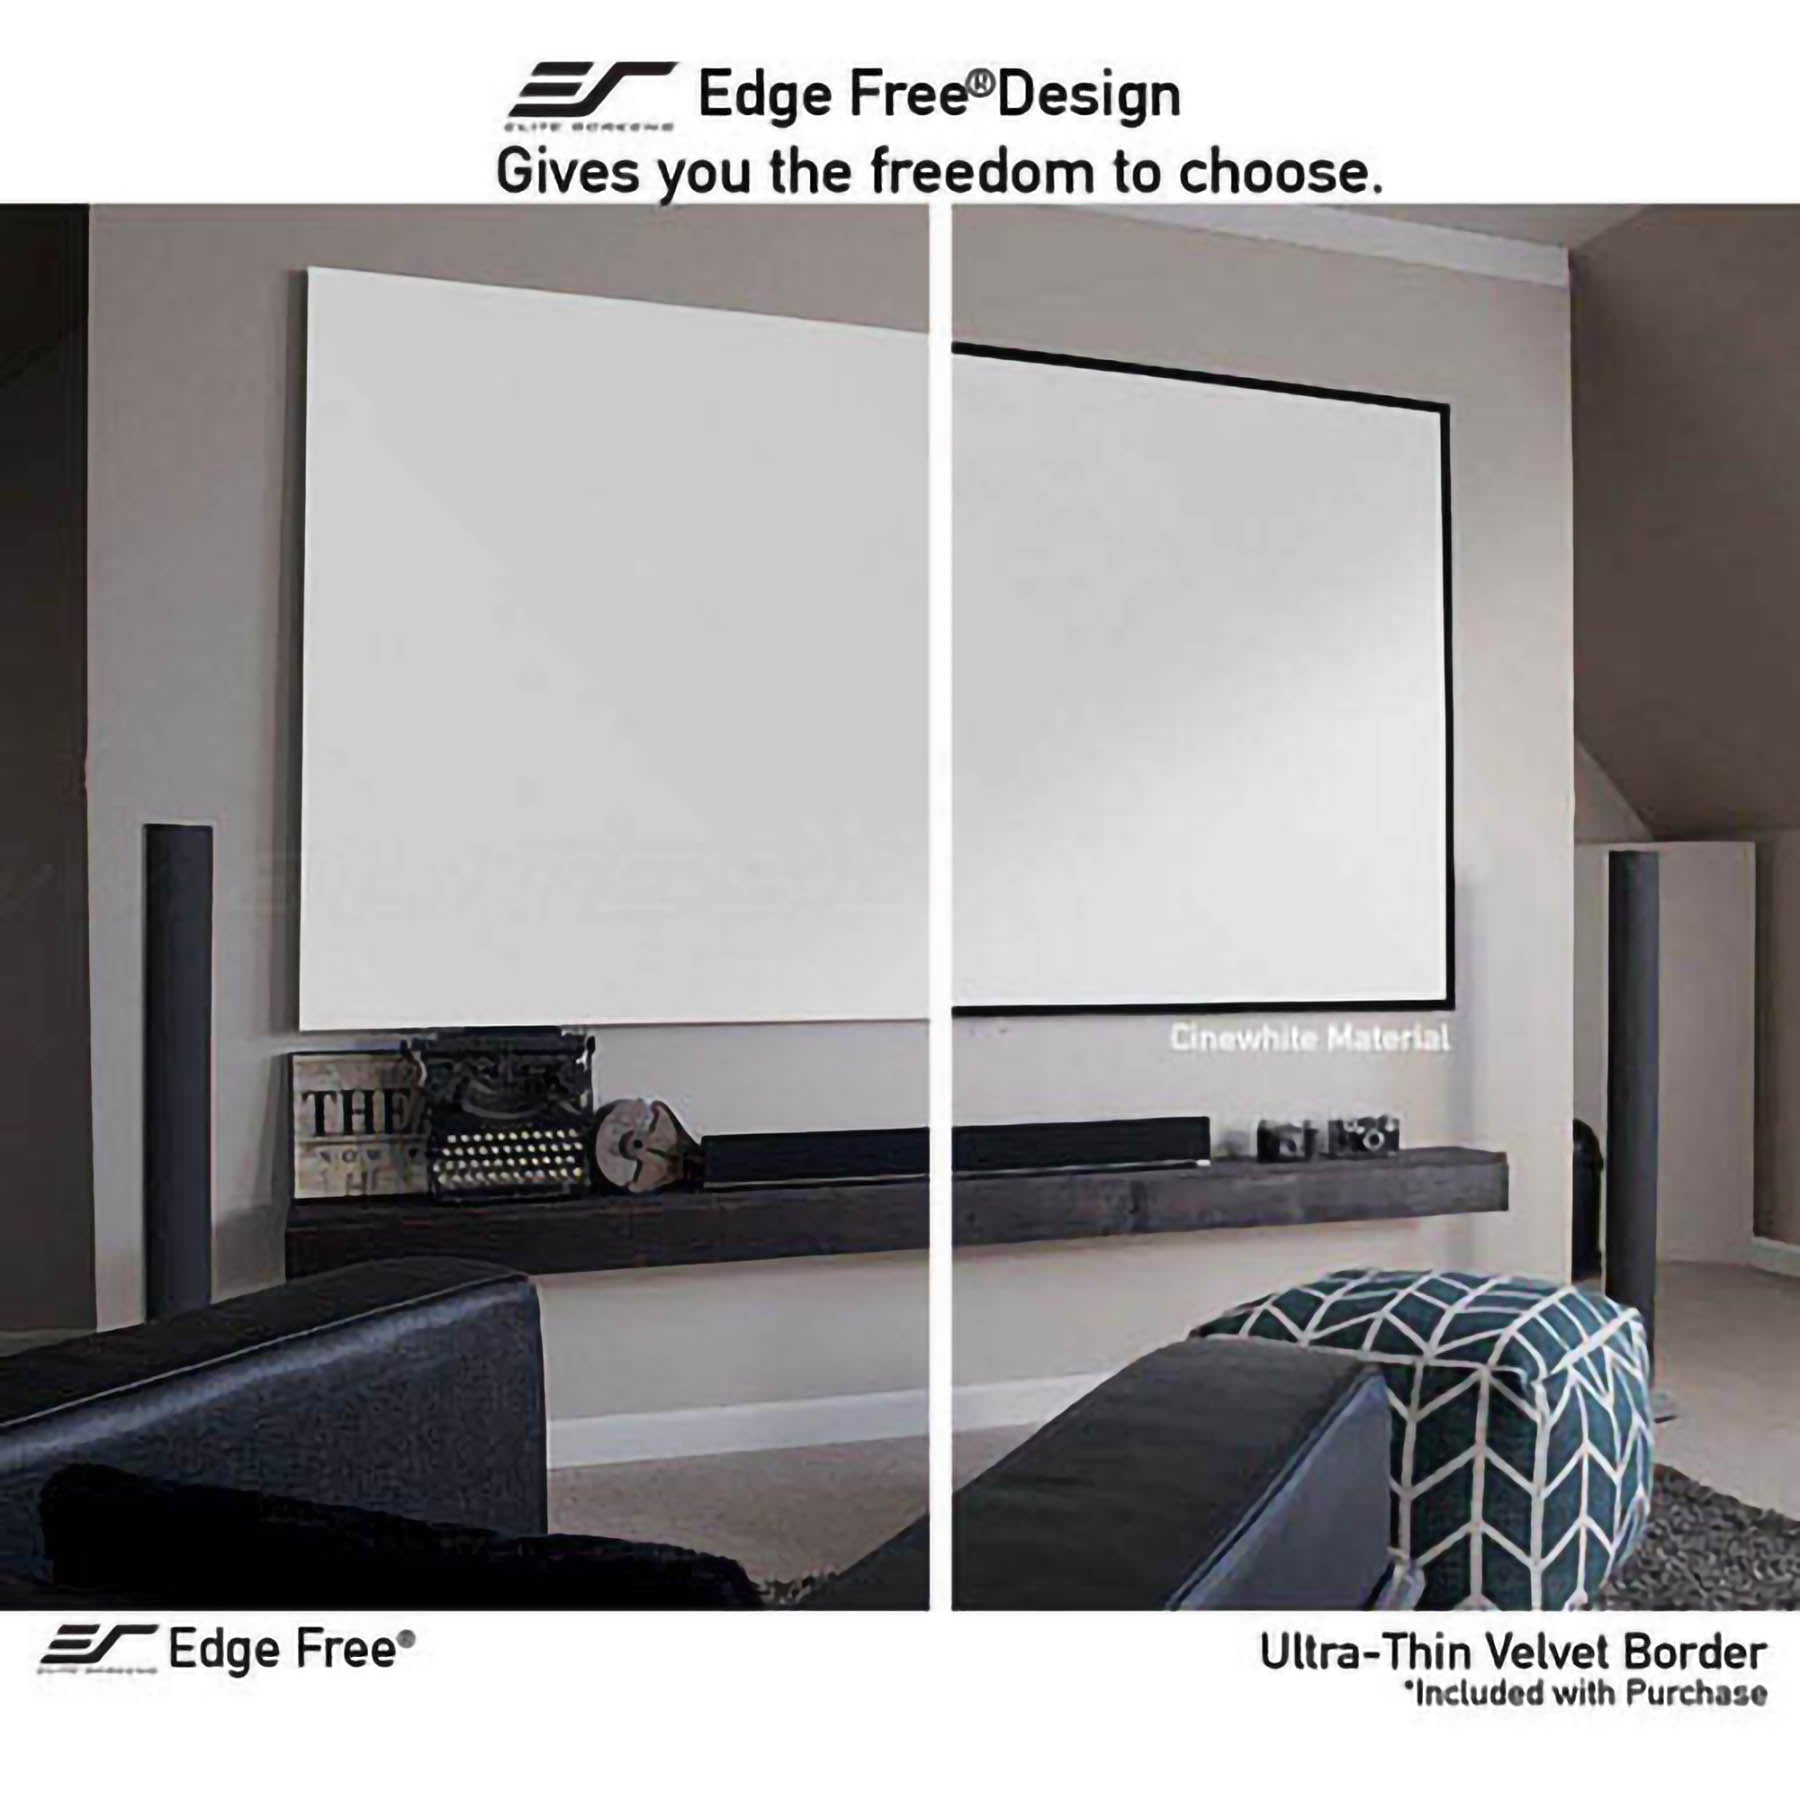 Elite Screens AR120WH2 Aeon Series 120" 16:9 4K Fixed Screen with EDGE FREE Frame